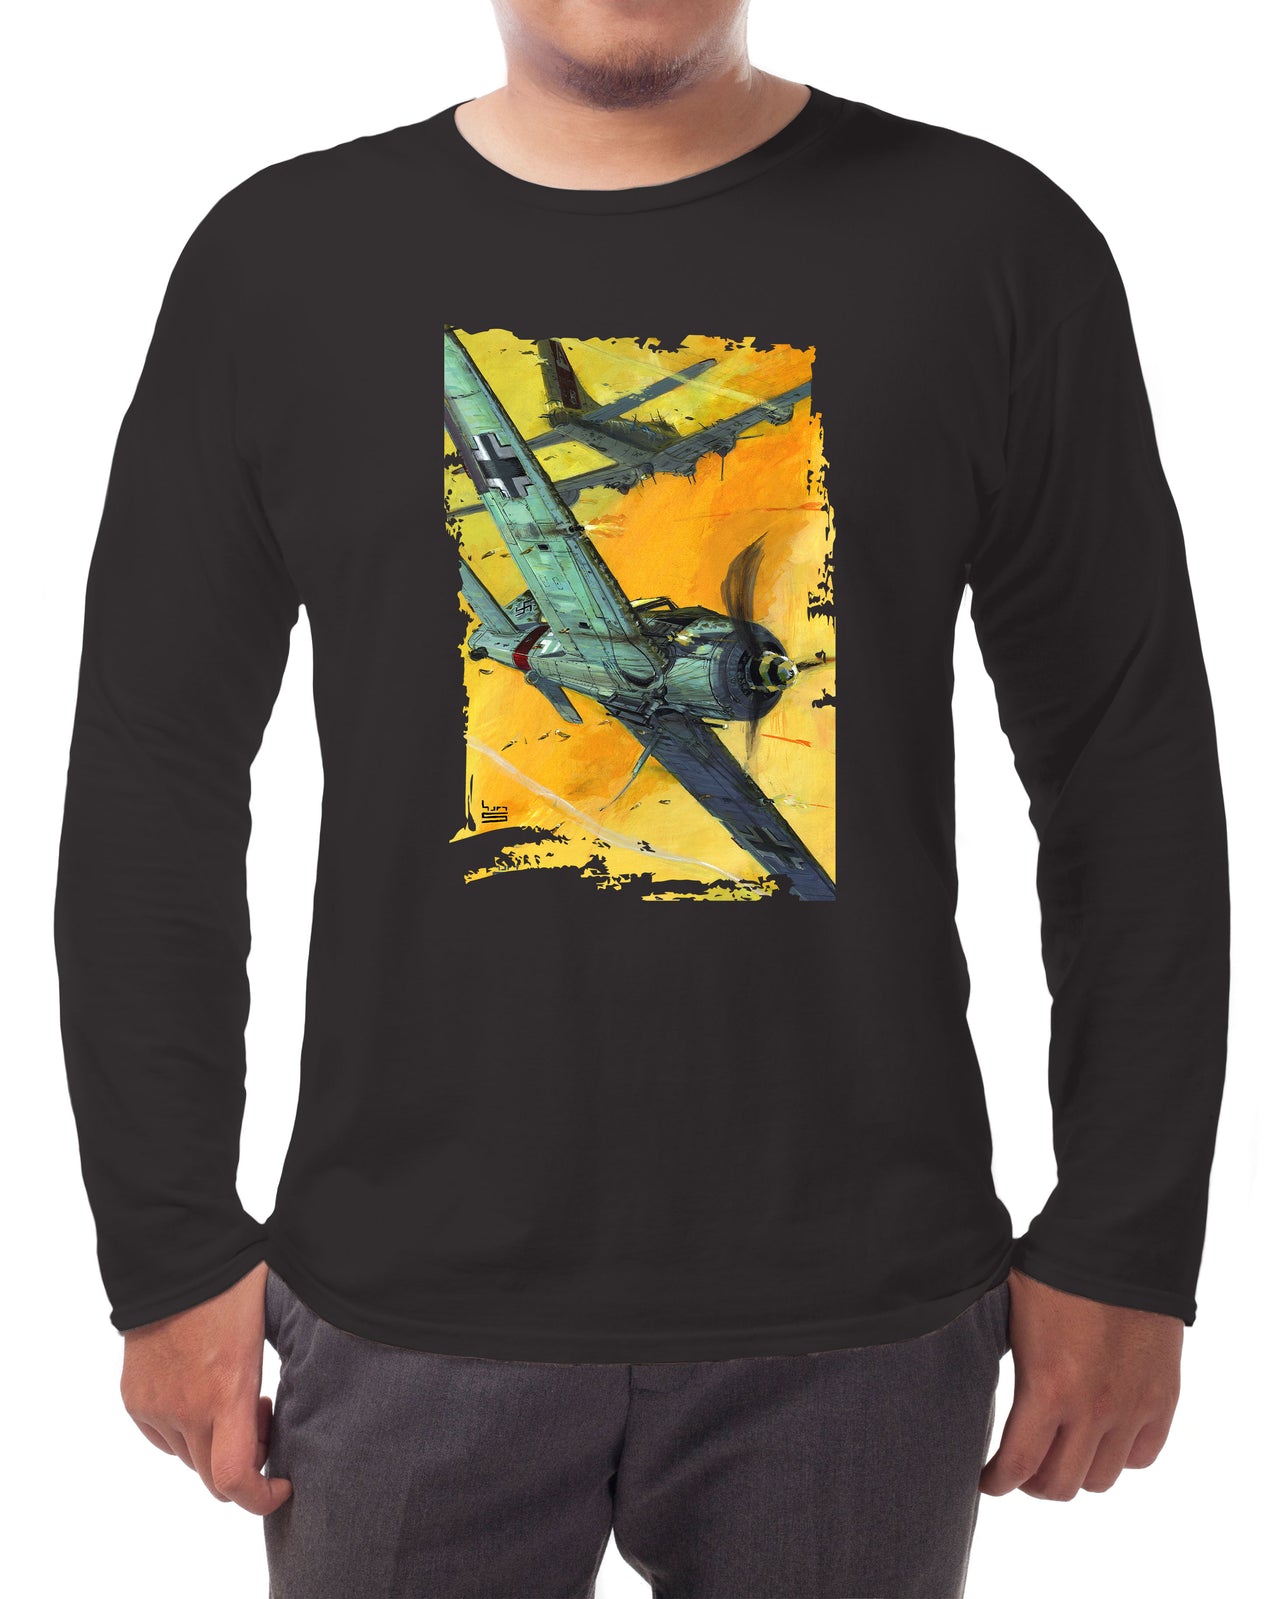 Focke-Wulf FW 190 - Long-sleeve T-shirt